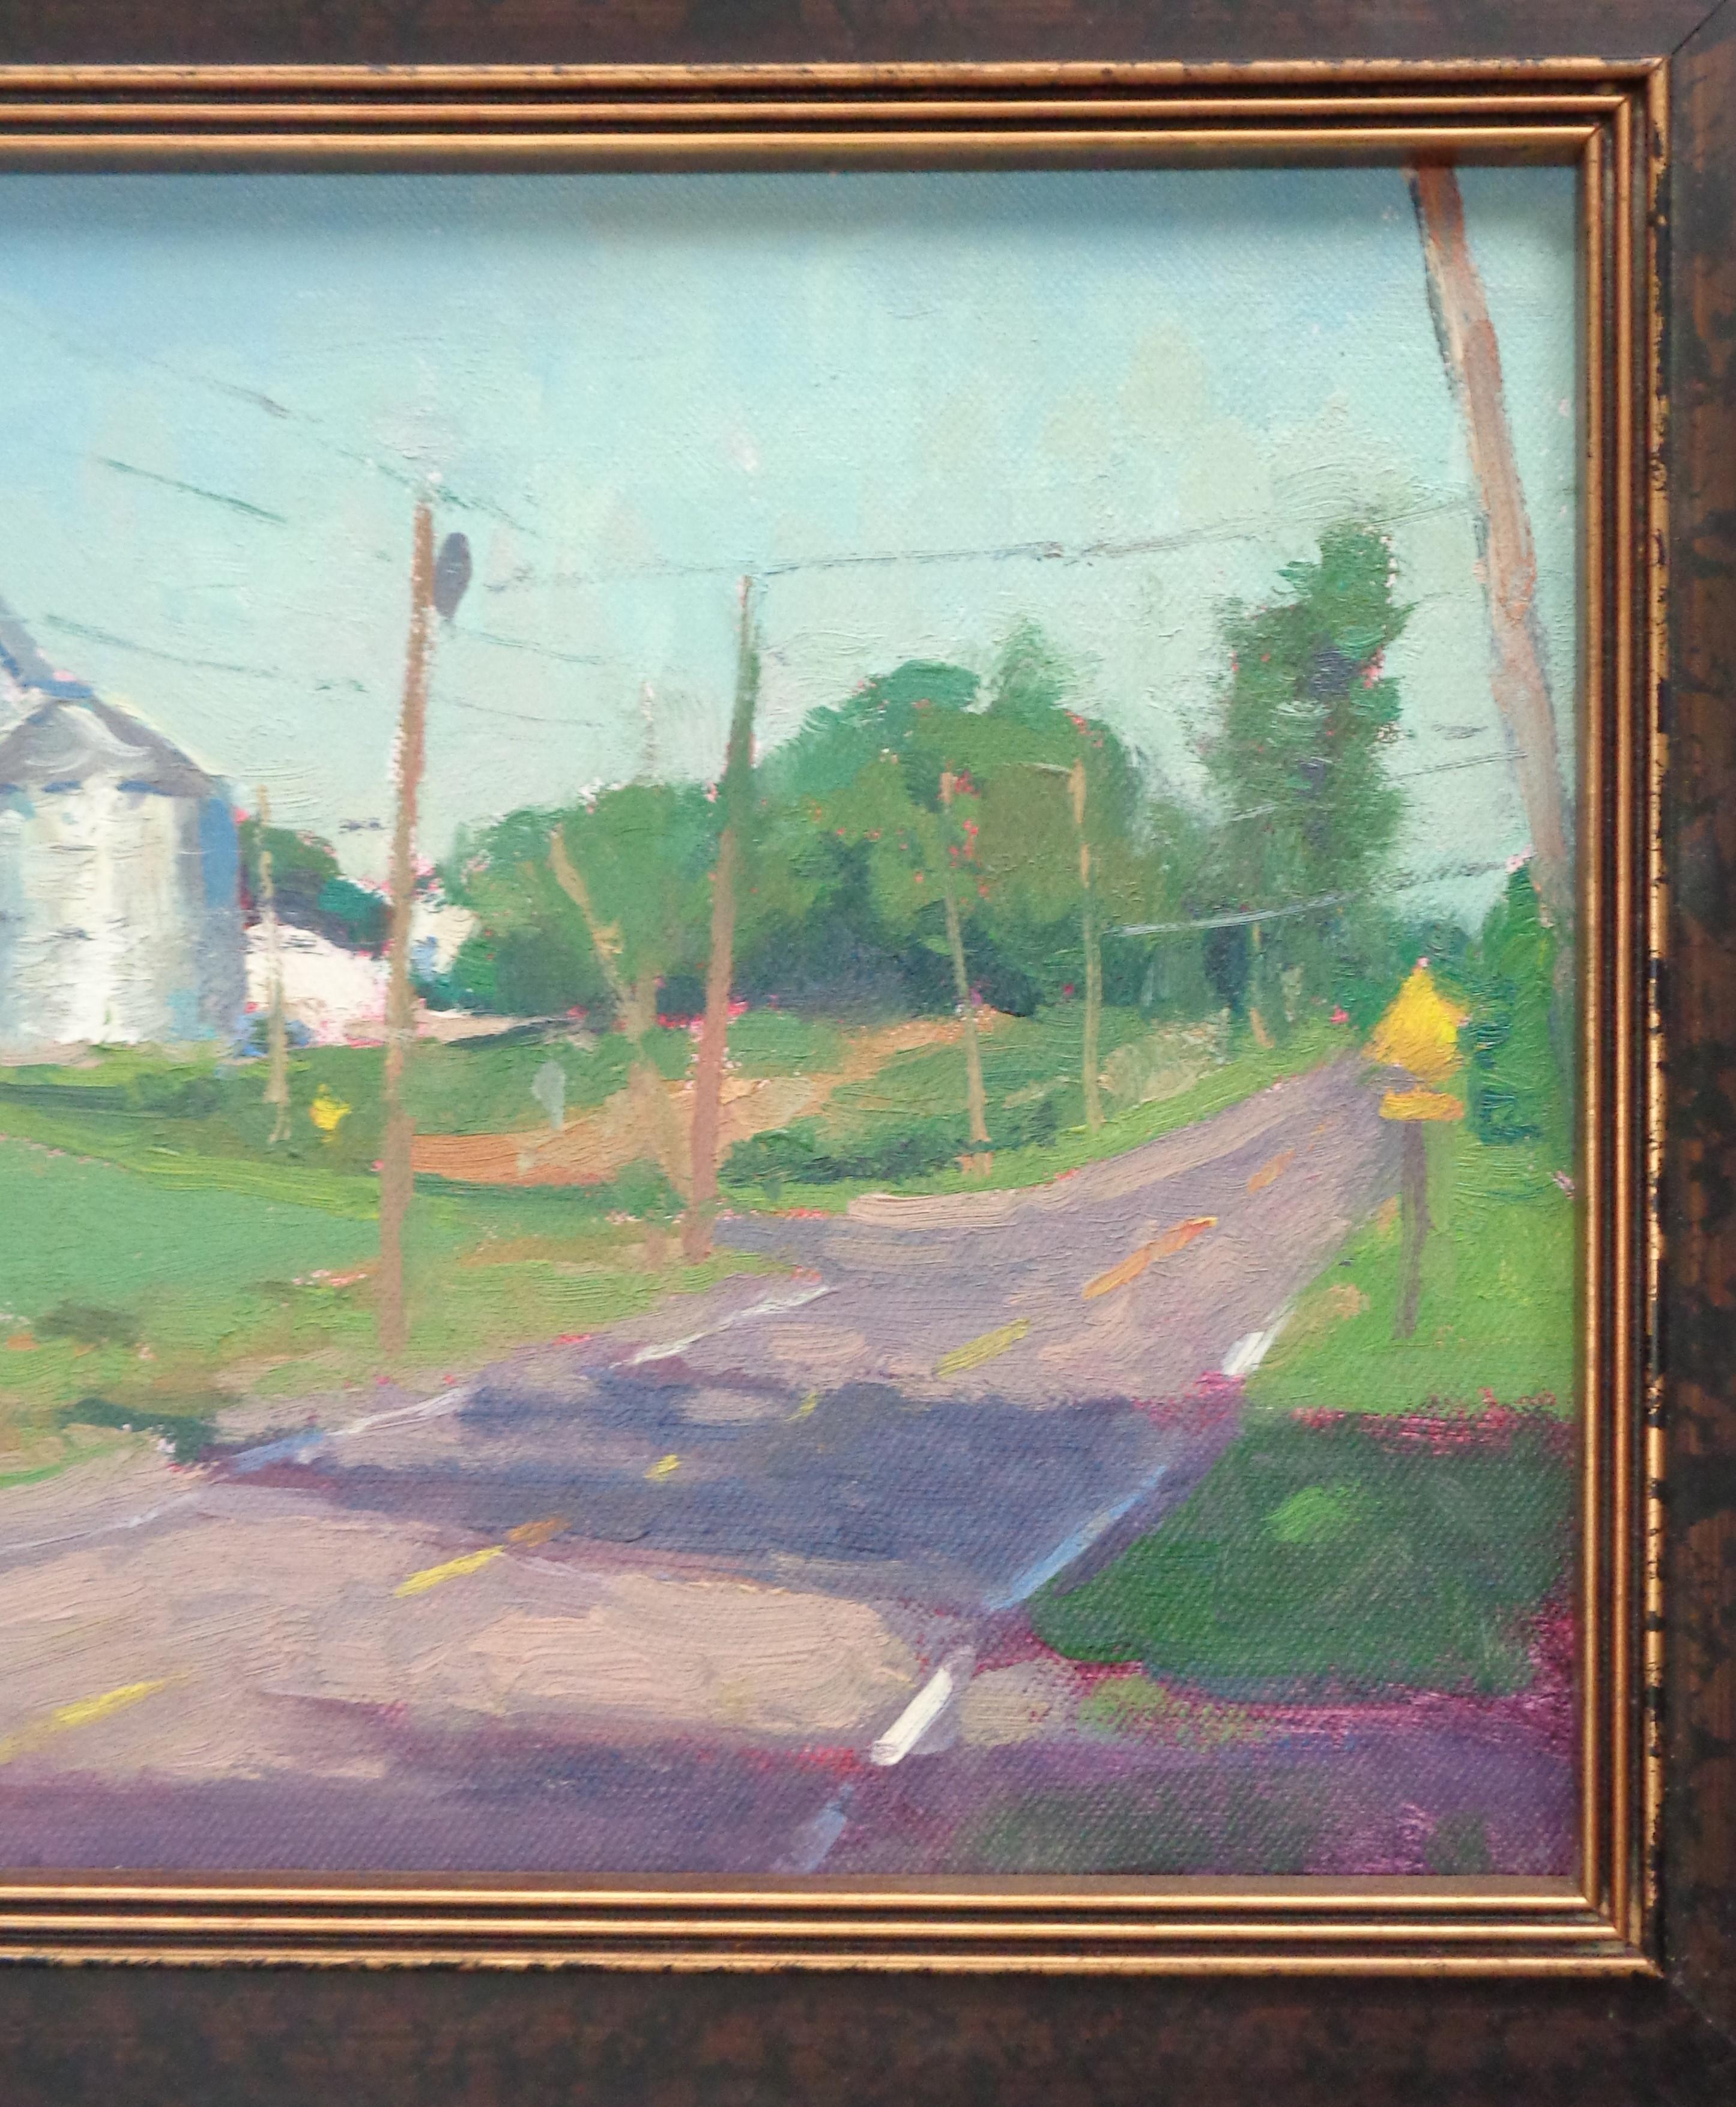  Impressionistic Rural Farm Landscape Oil Painting Michael Budden Morning Light For Sale 3